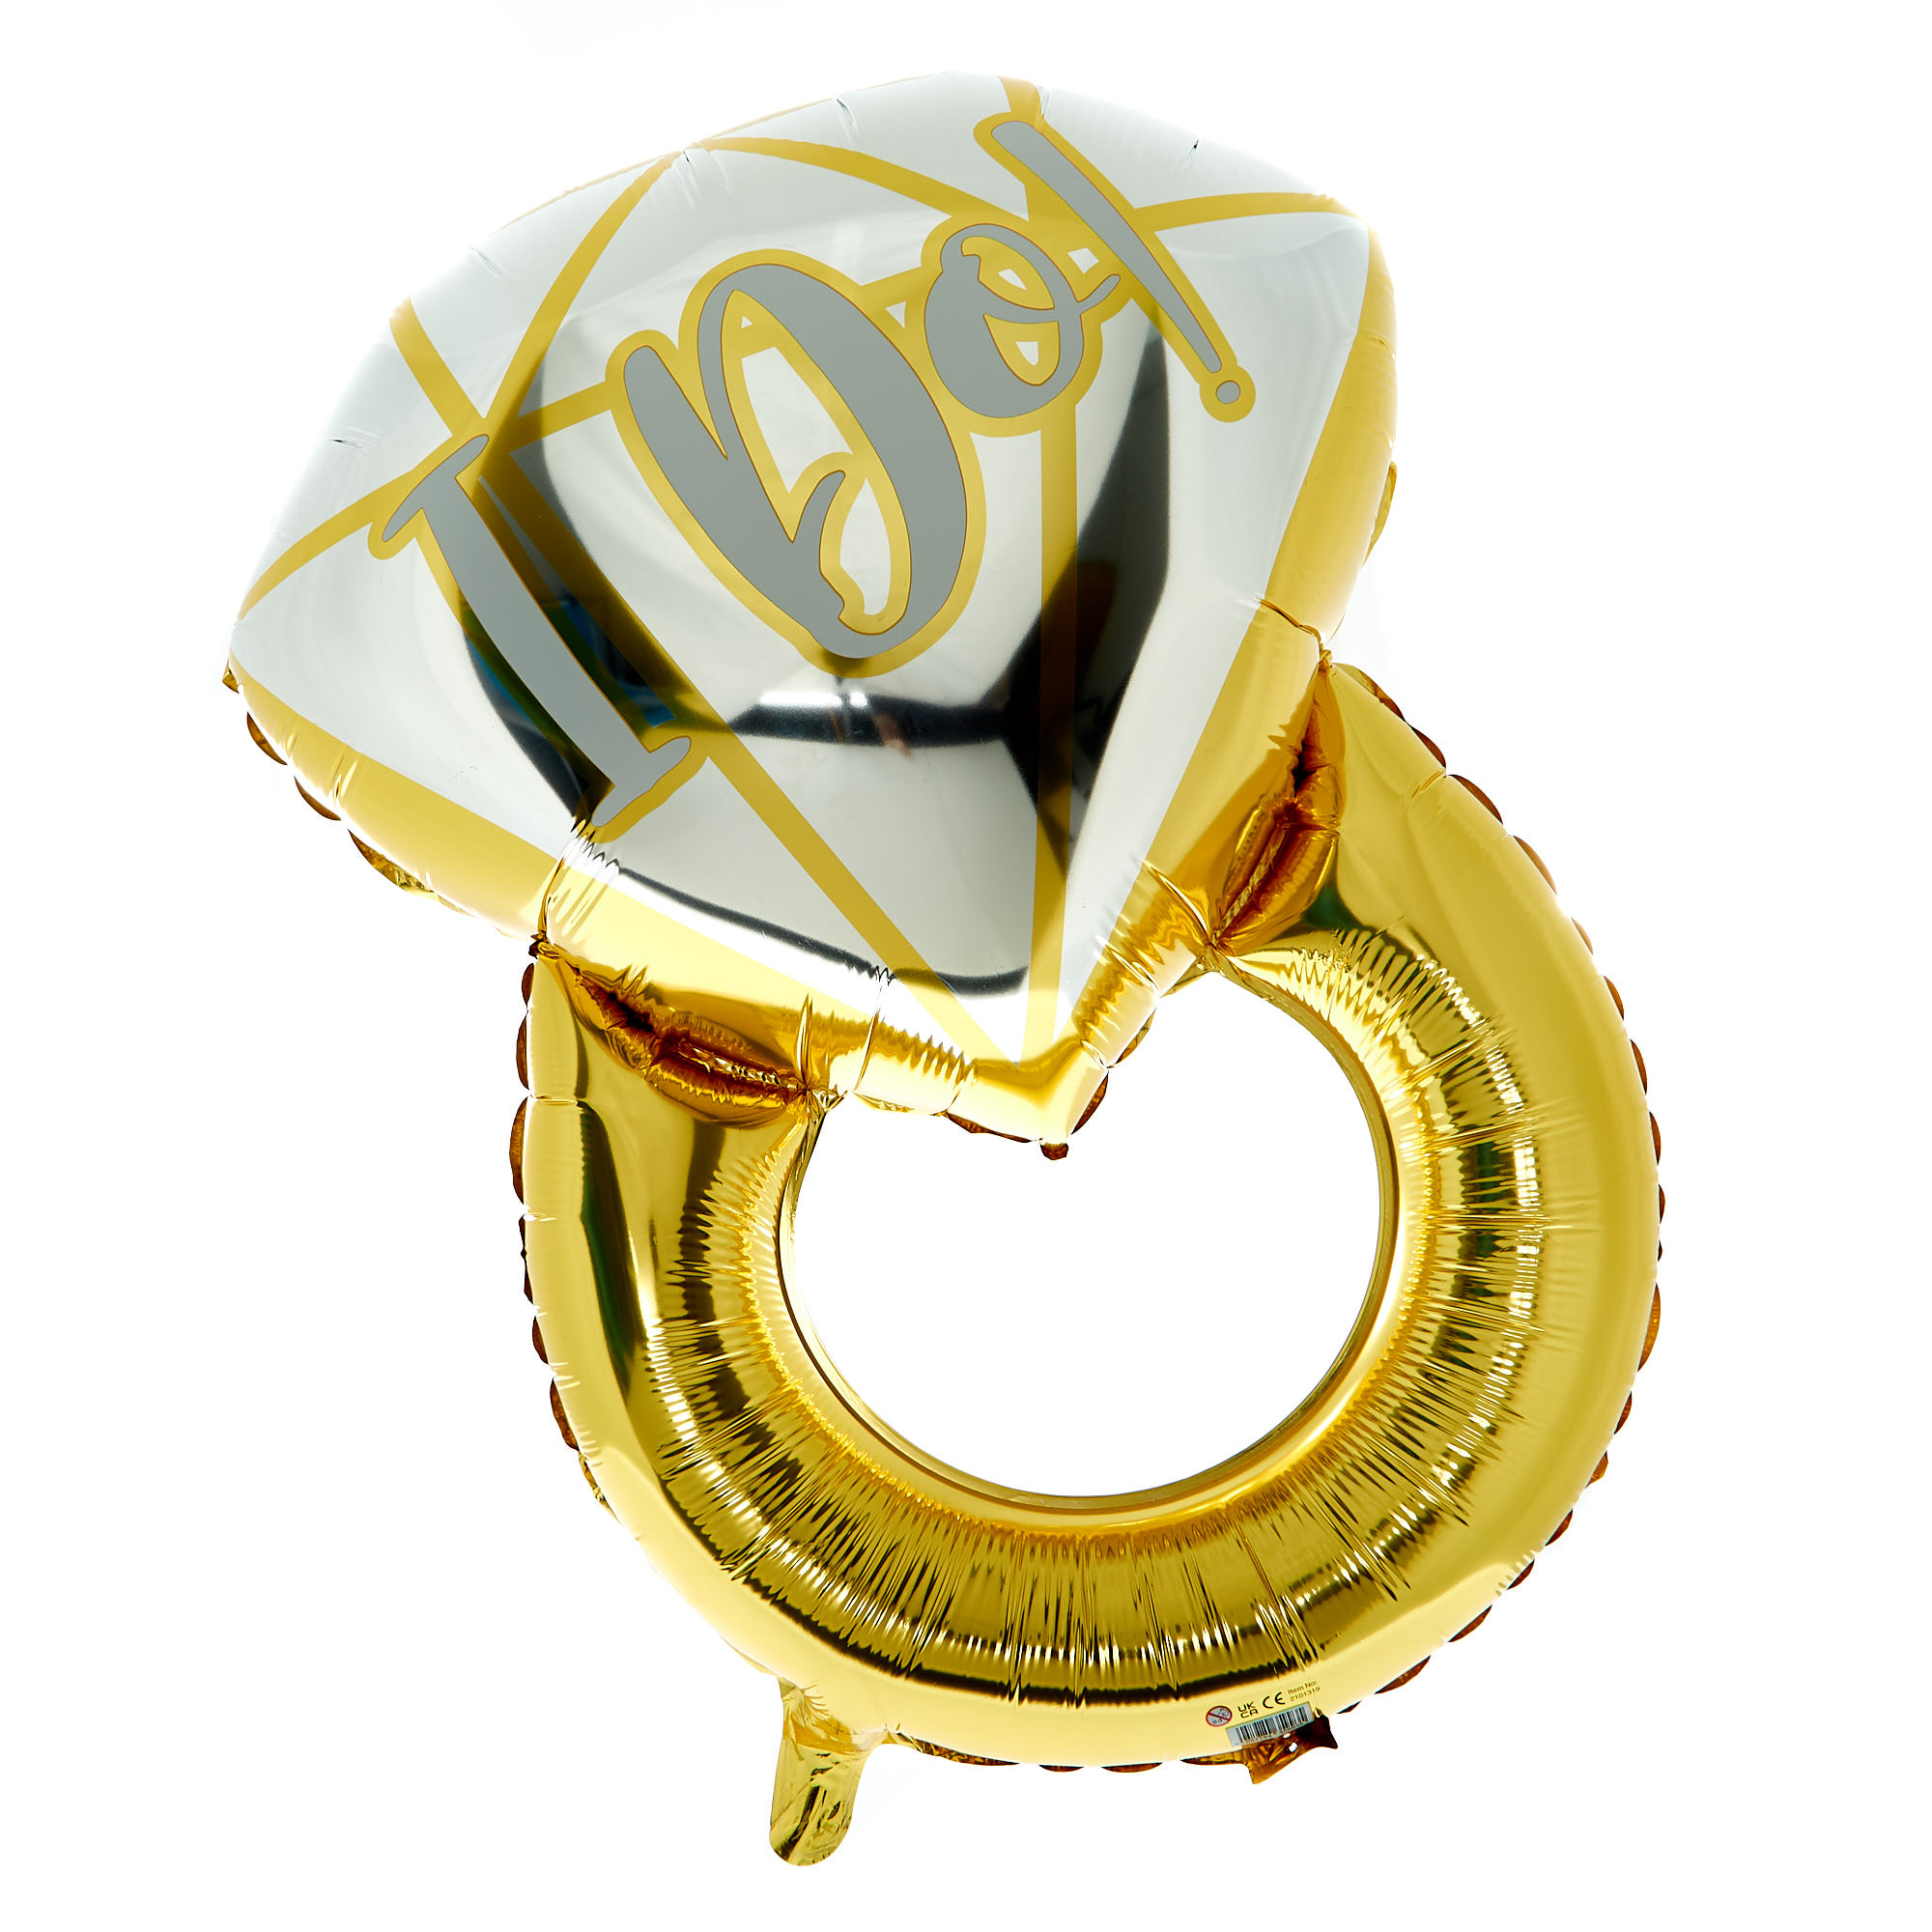 26-Inch "I Do"" Wedding Ring Foil Helium Balloon"